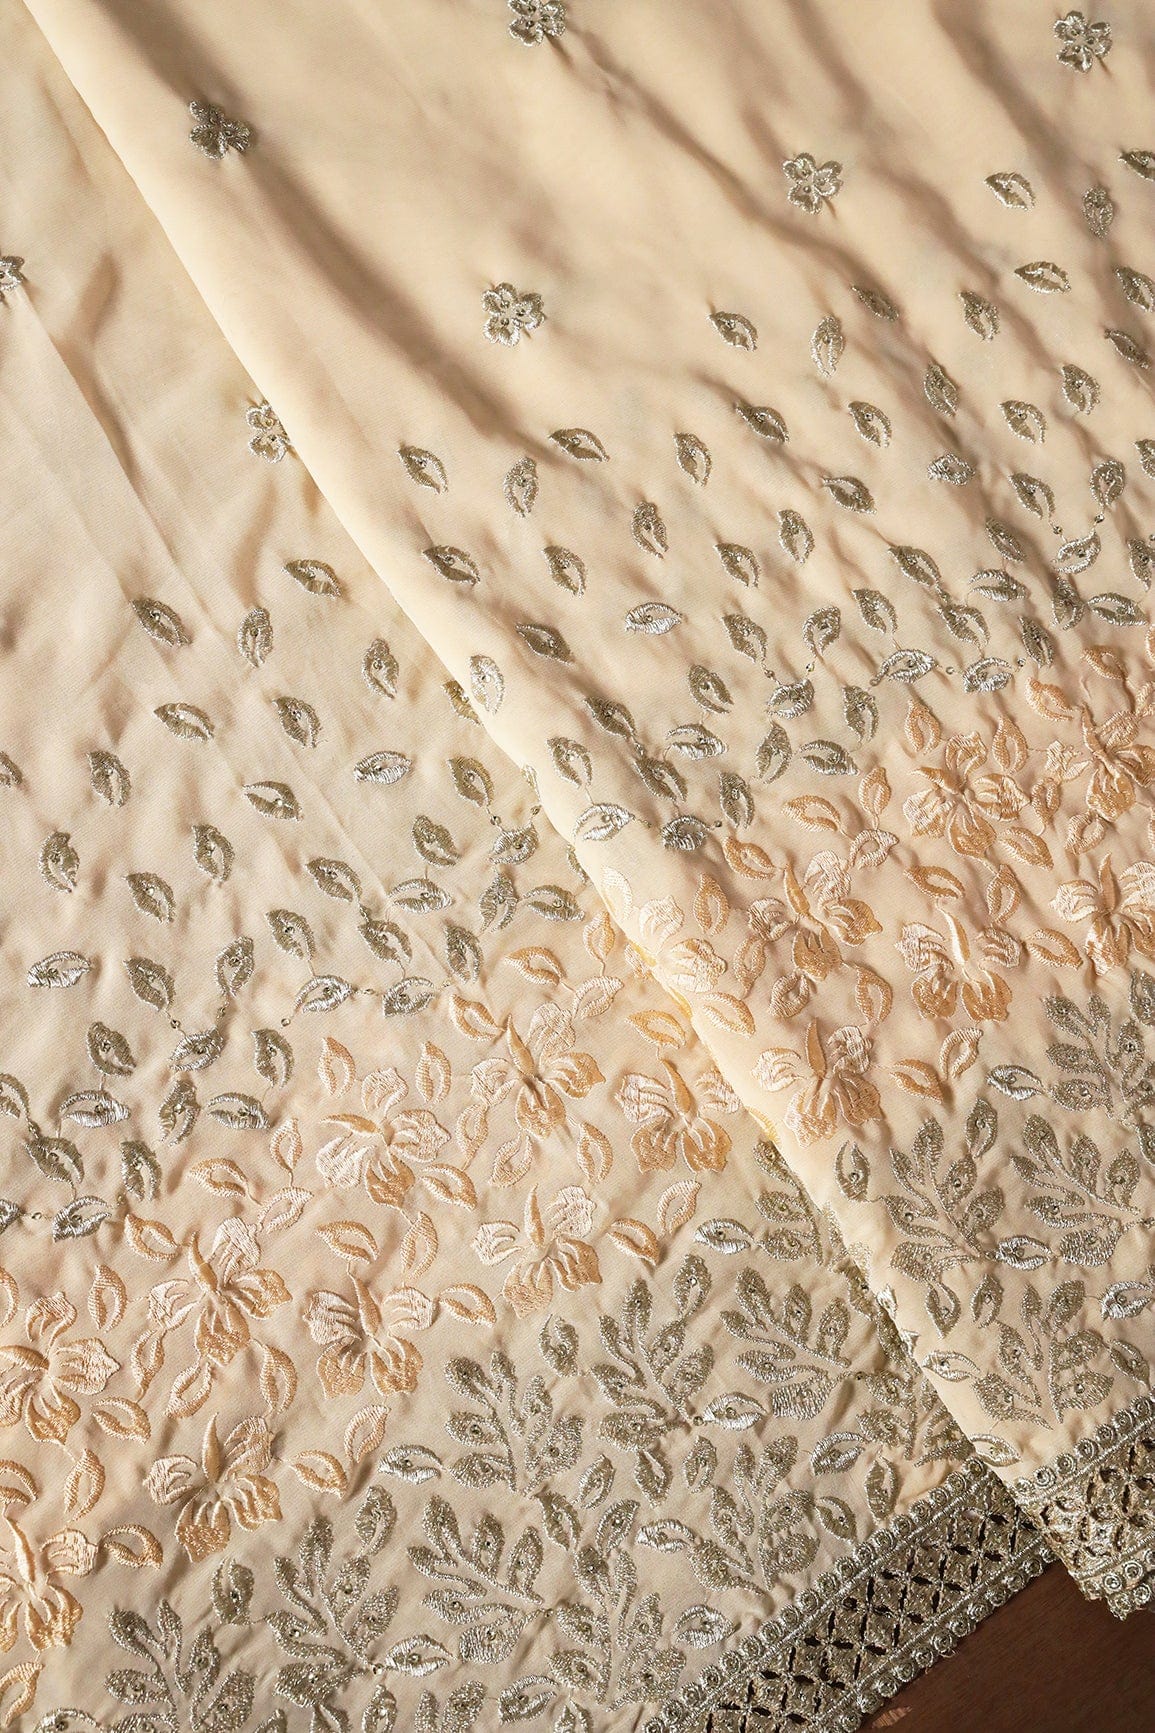 doeraa Embroidery Fabrics Big Width''56'' Silver Zari Leafy Embroidery Work On Beige Georgette Fabric With Border